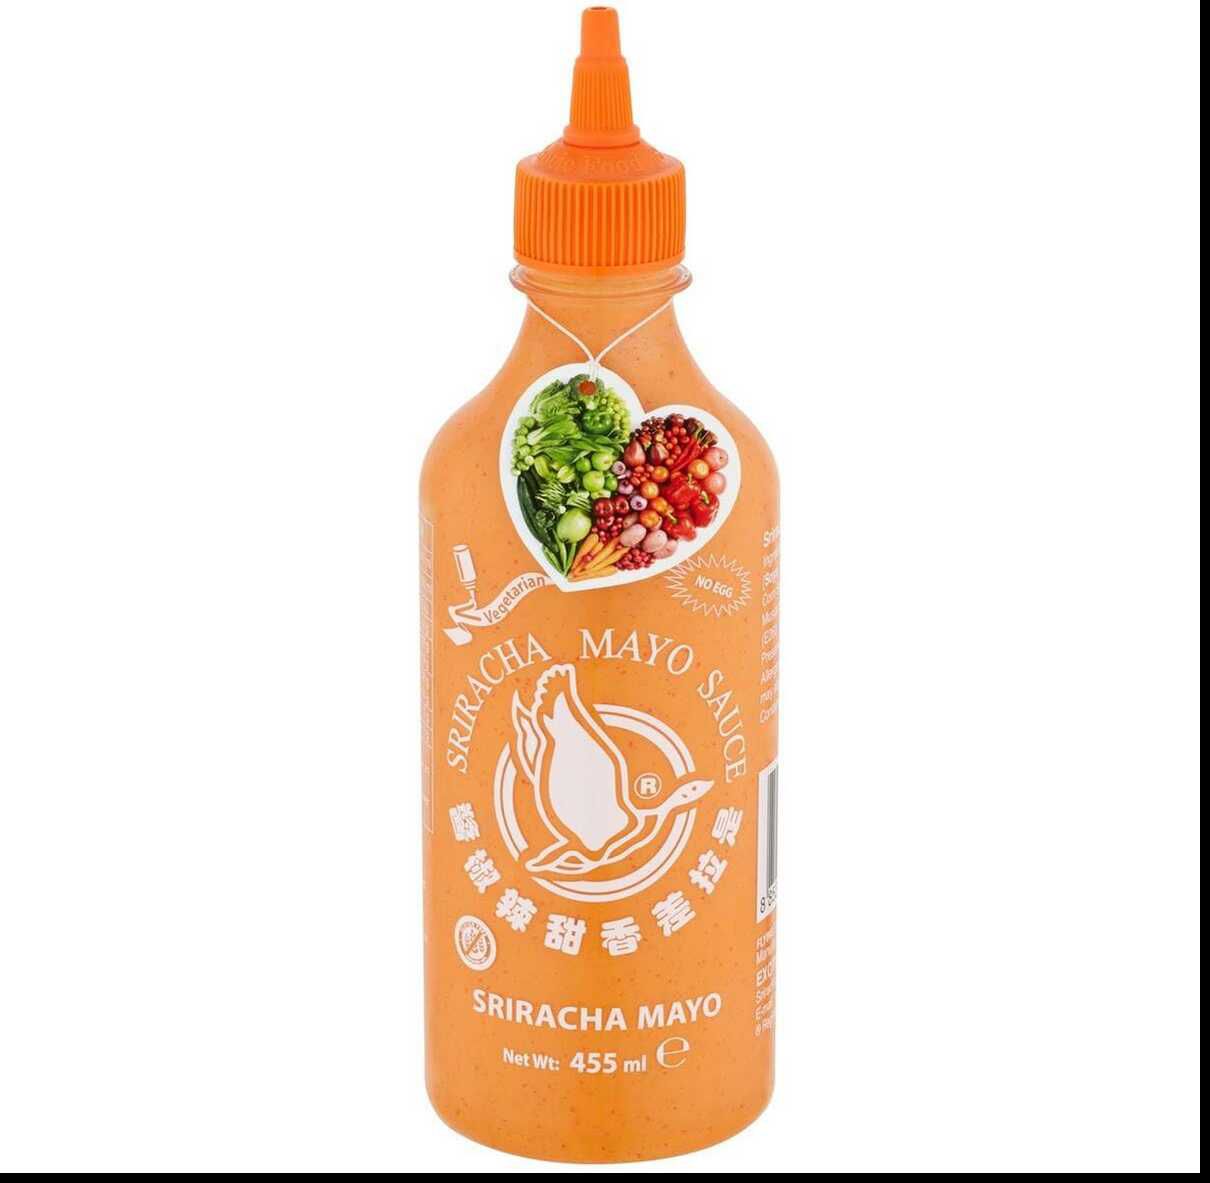 Flying Goose Sriracha Mayoo Sauce 455ml für 5,05€ statt 7€